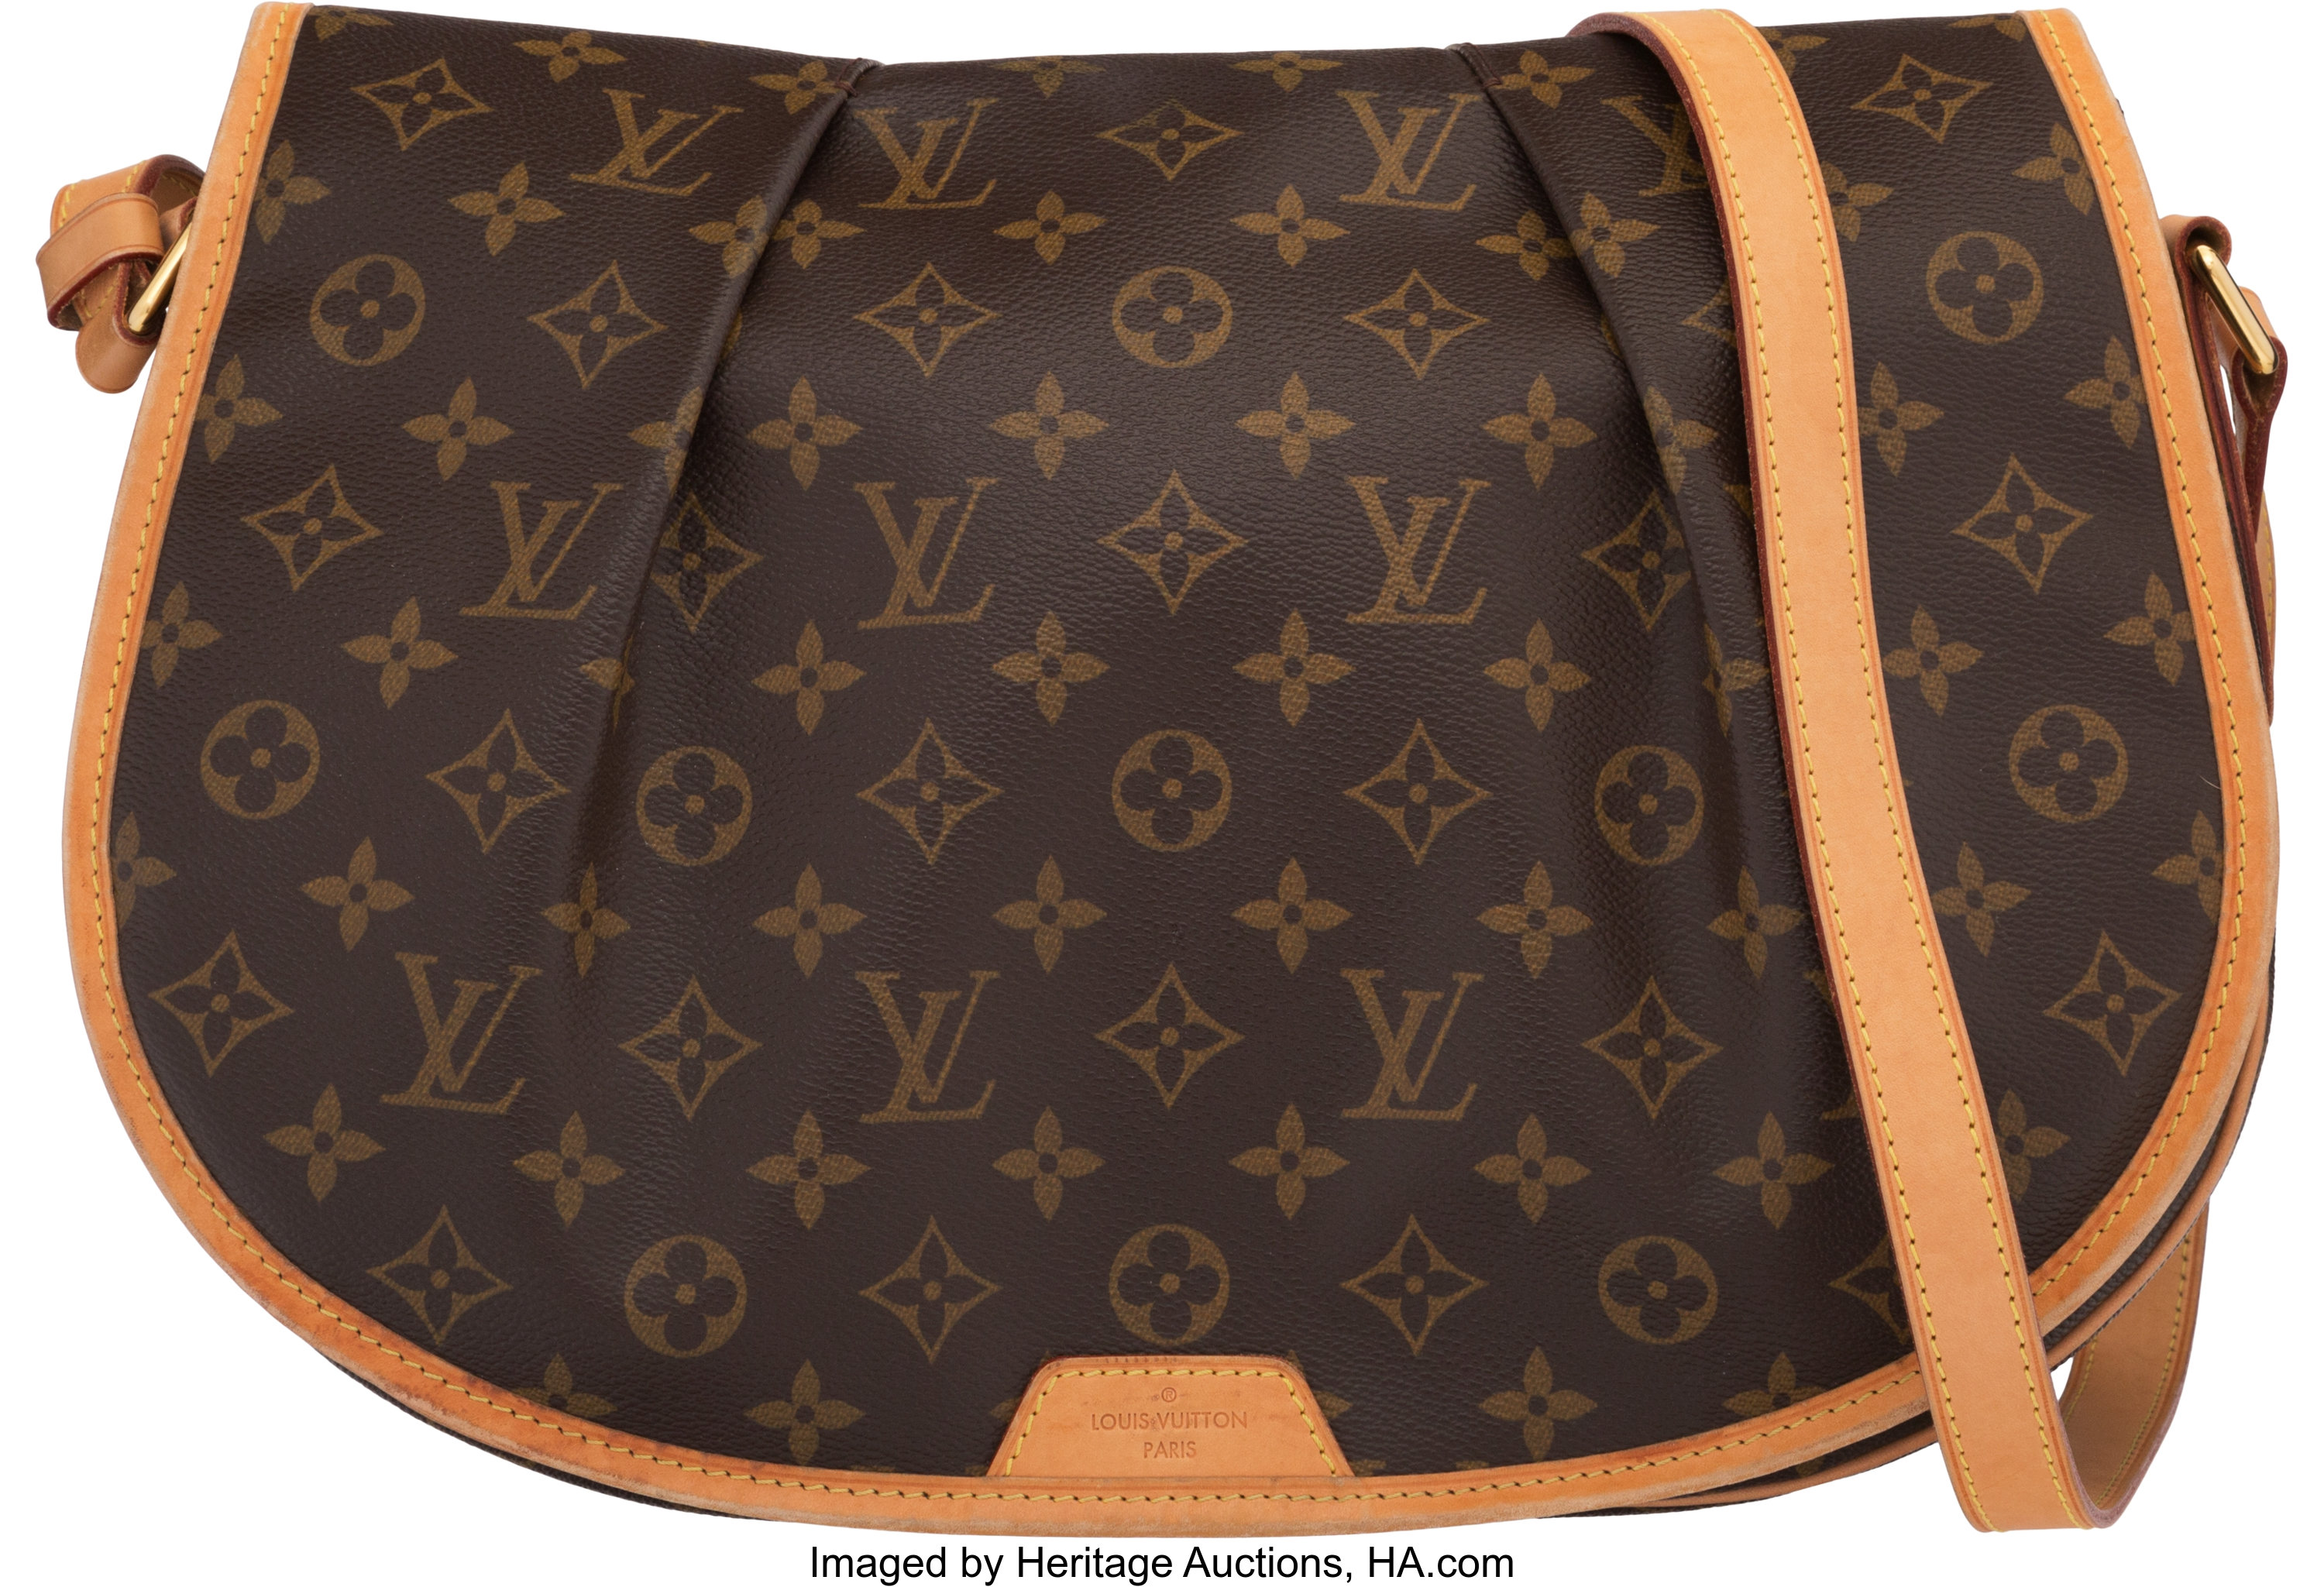 Louis Vuitton 3 in 1 bag